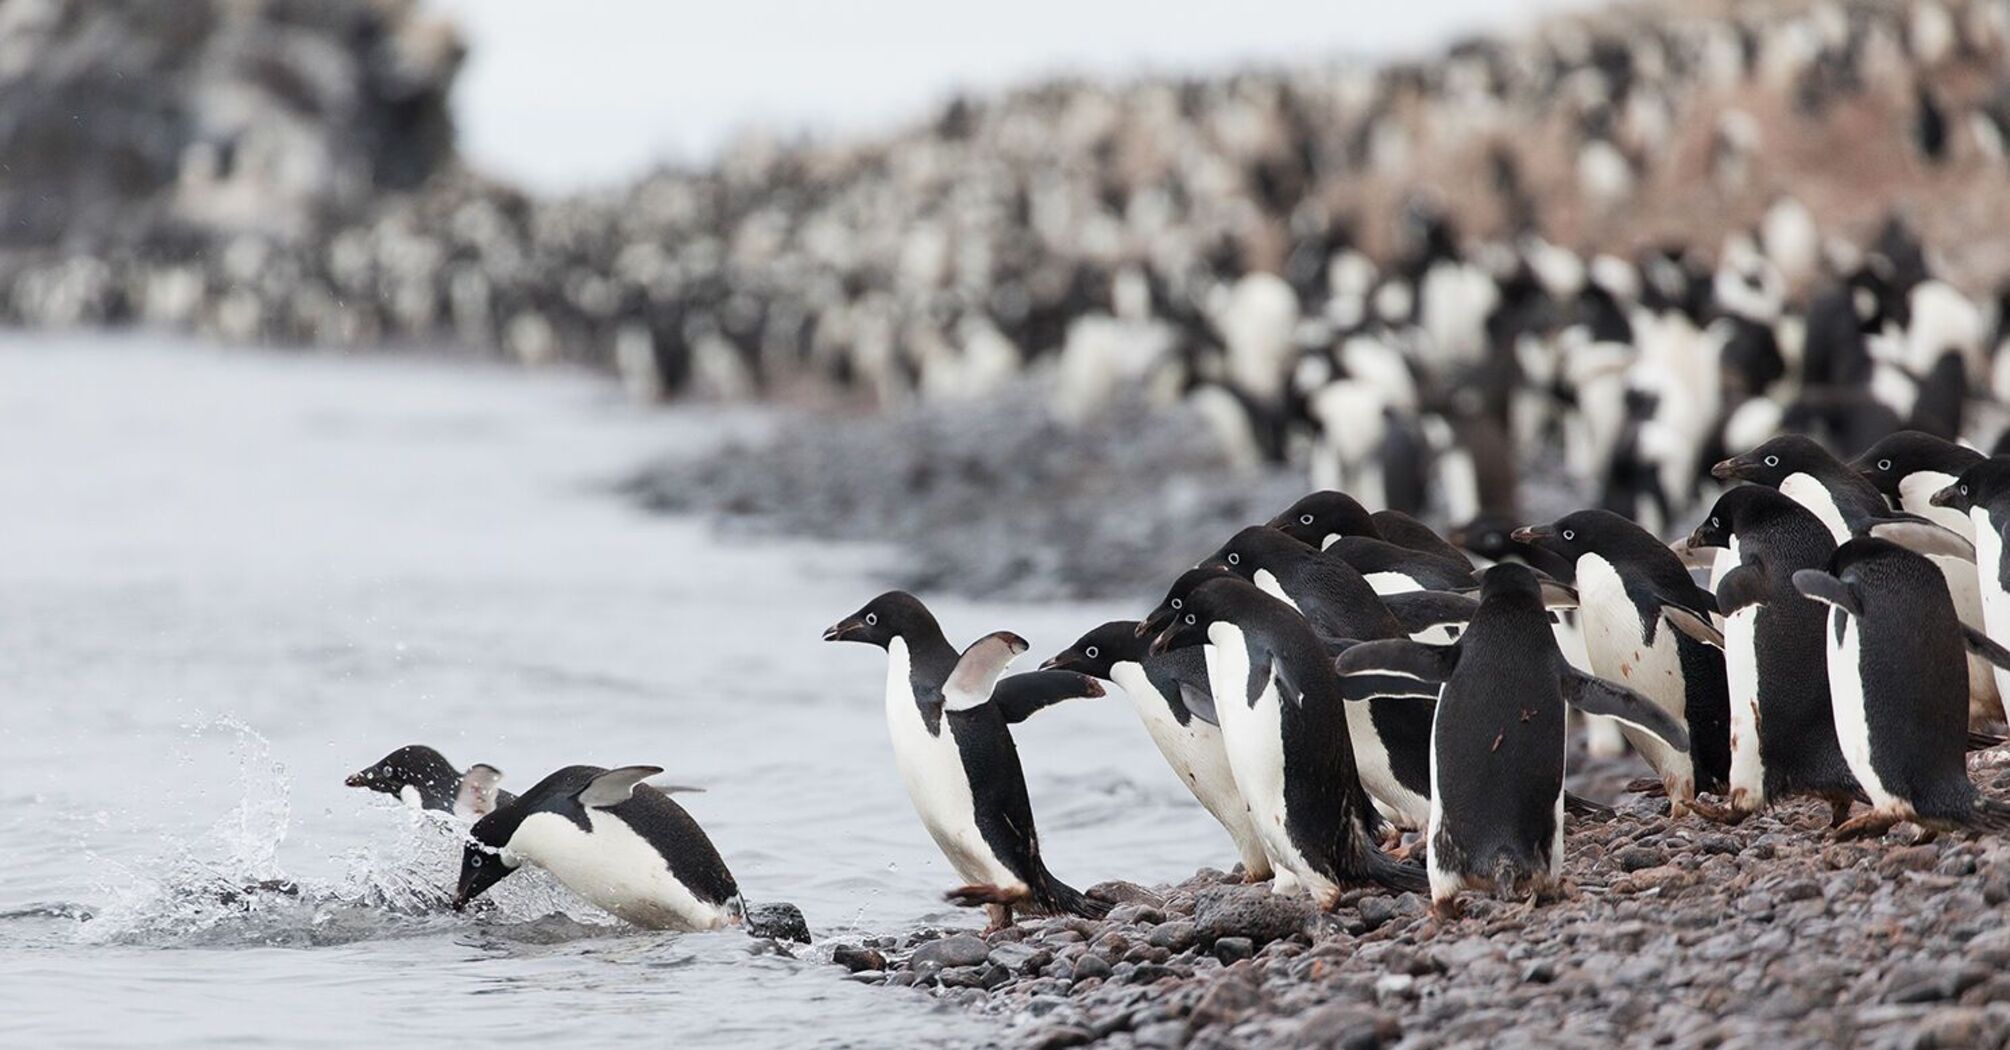 A true symbol of Antarctica: Adélie penguins travel thousands of kilometres across the sea ice every year